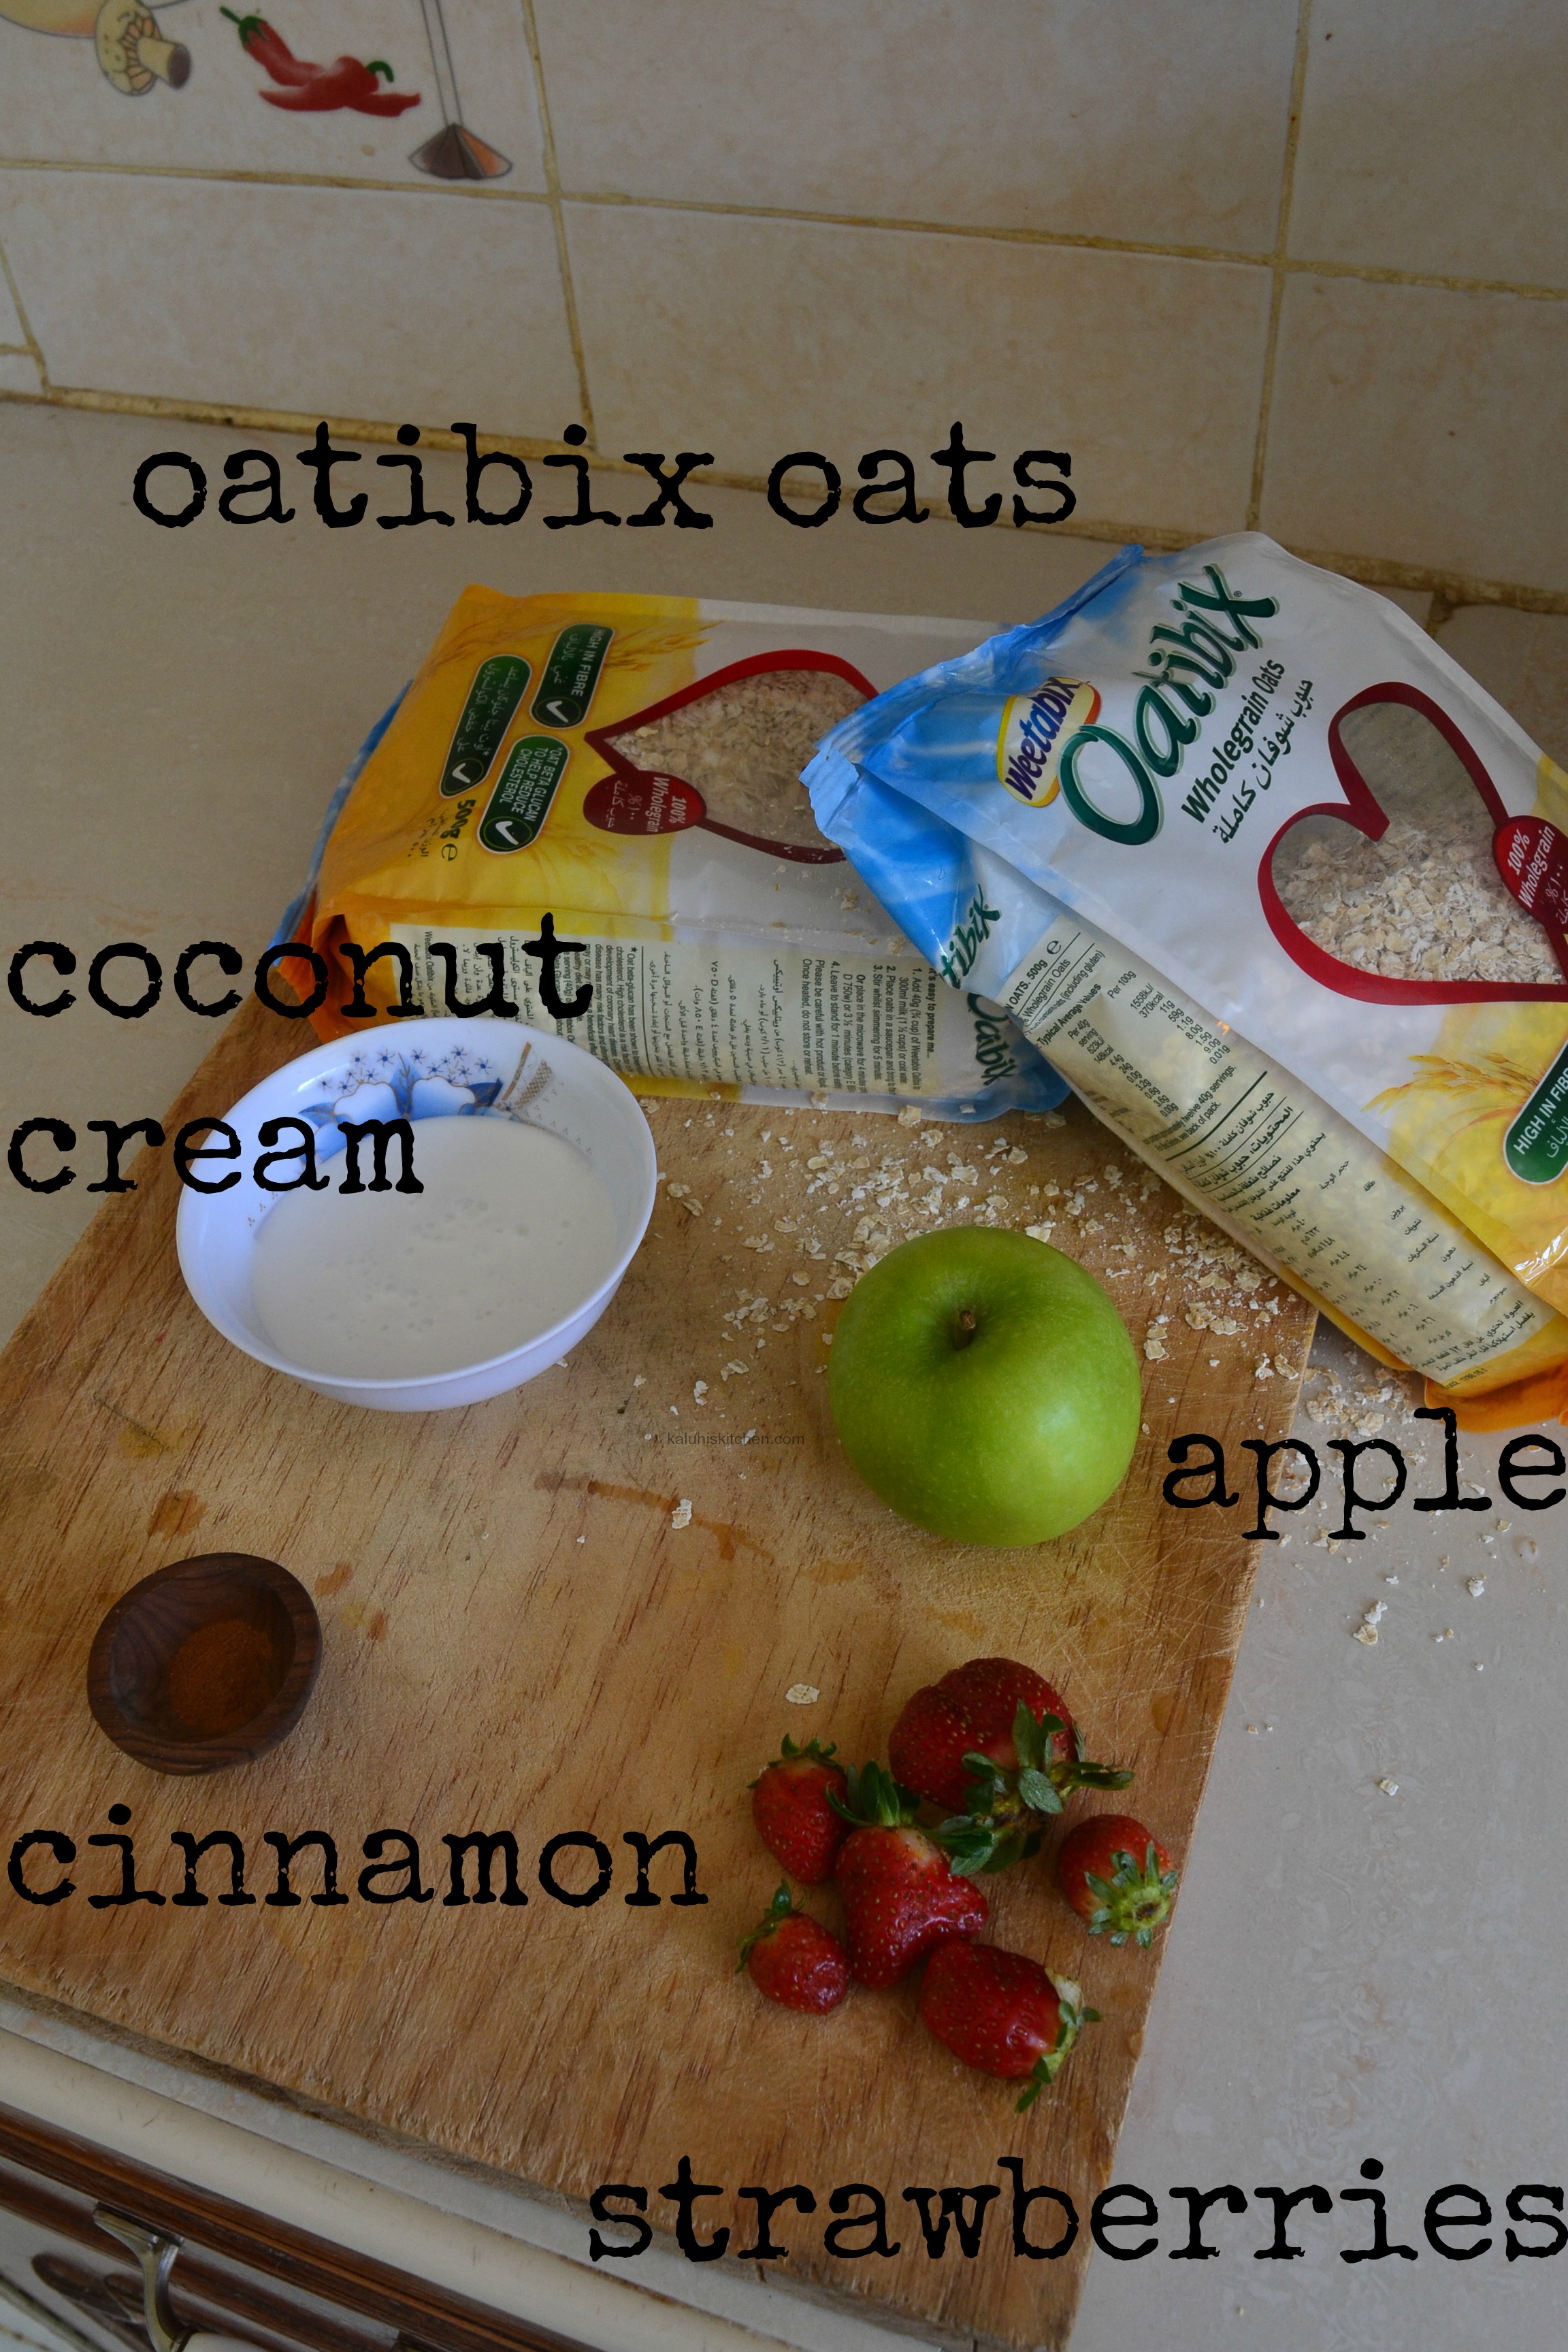 how to make oats_howto cook oats_oatibix oats_kaluhiskitchen.com